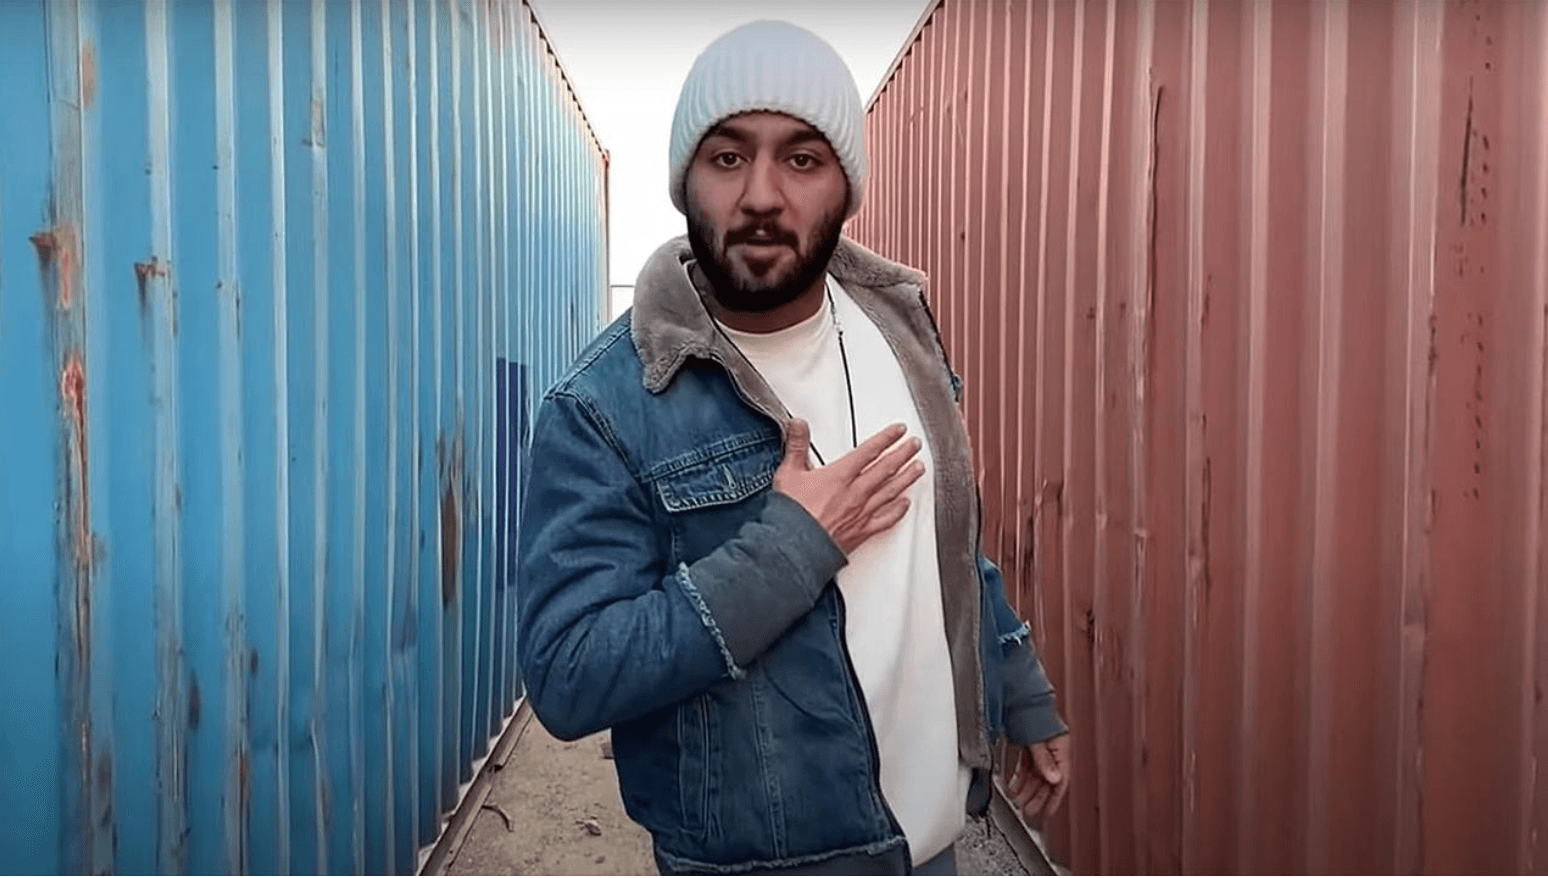 Iranian rapper Toomaj Salehi has been sentenced to death in Iran.